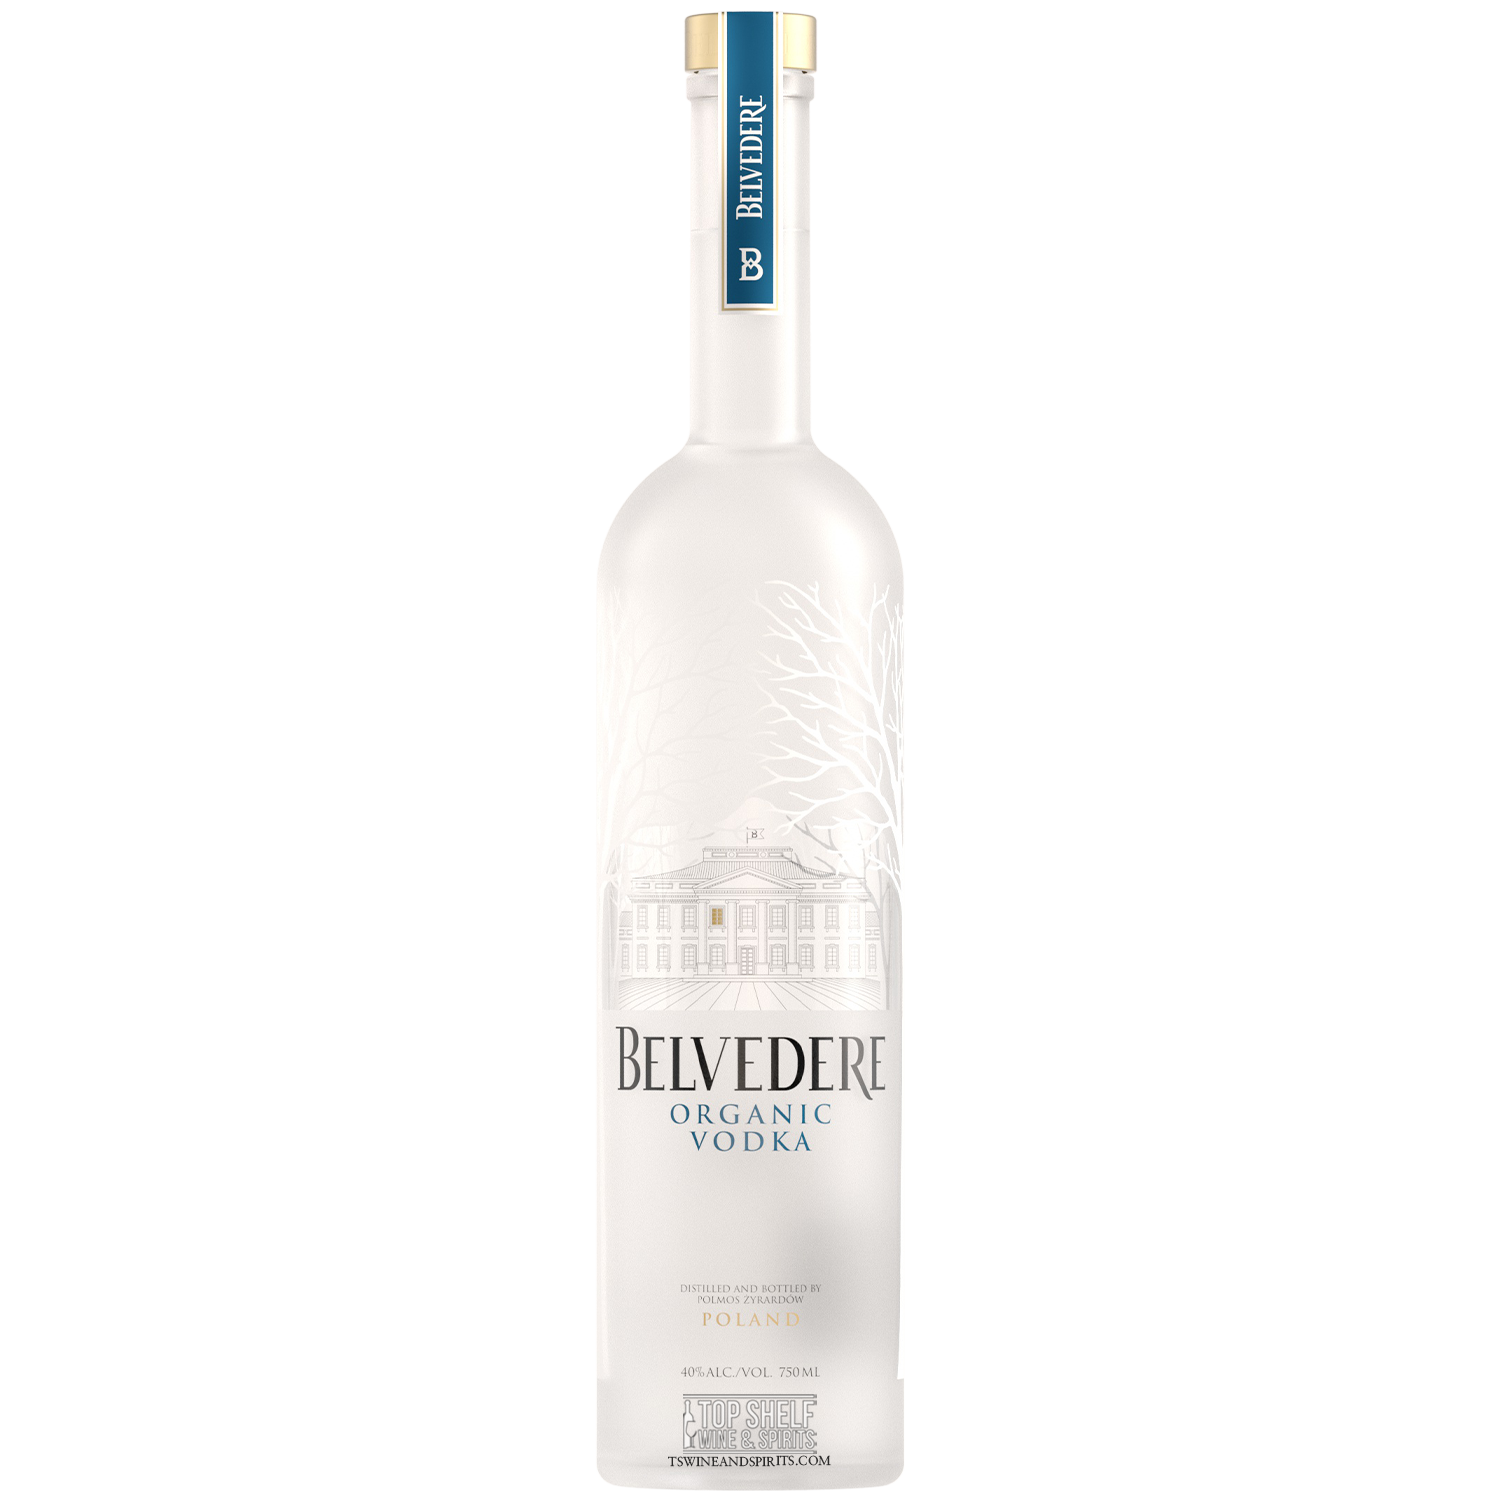 Vodka Belvedere cl 100 - AL.VI.DO.C